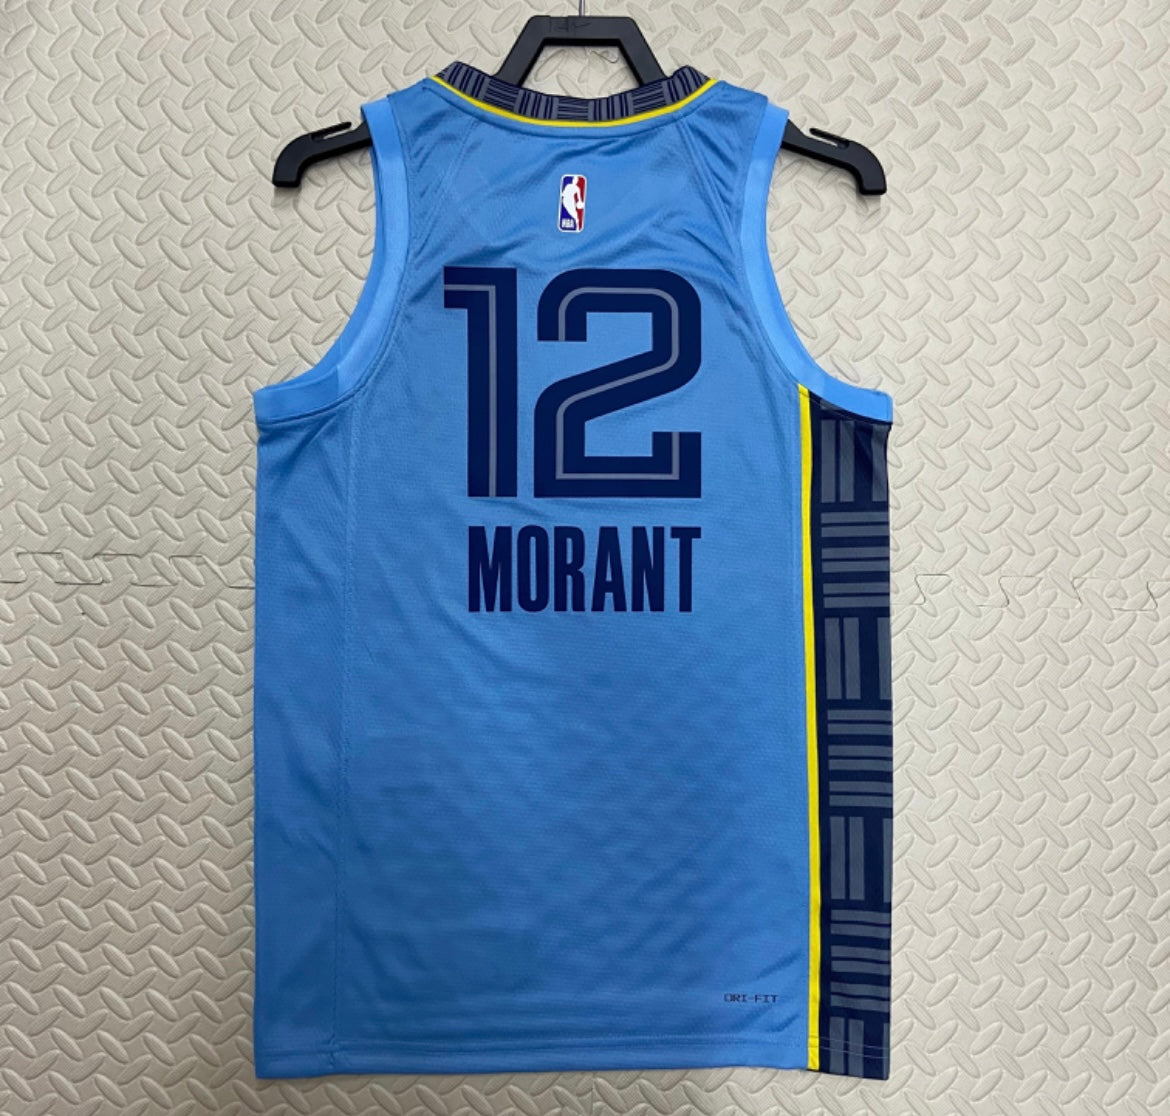 2022-23 Memphis Grizzlies Morant #12 Jordan Swingman Alternate